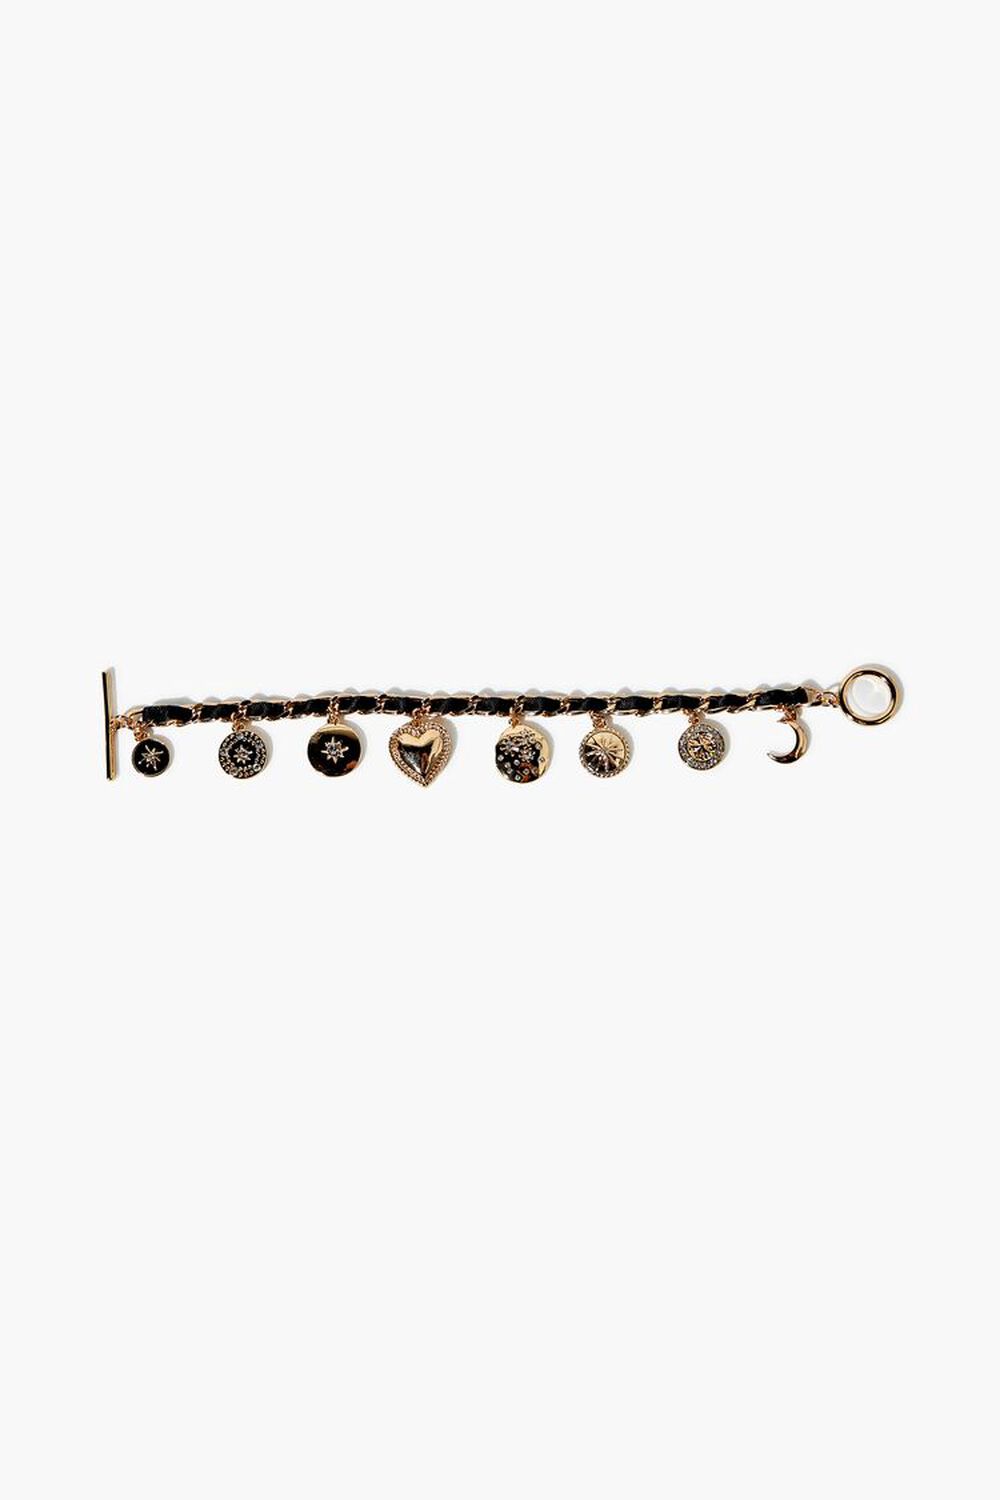 BLACK/GOLD Ribbon-Chain Charm Bracelet, image 1